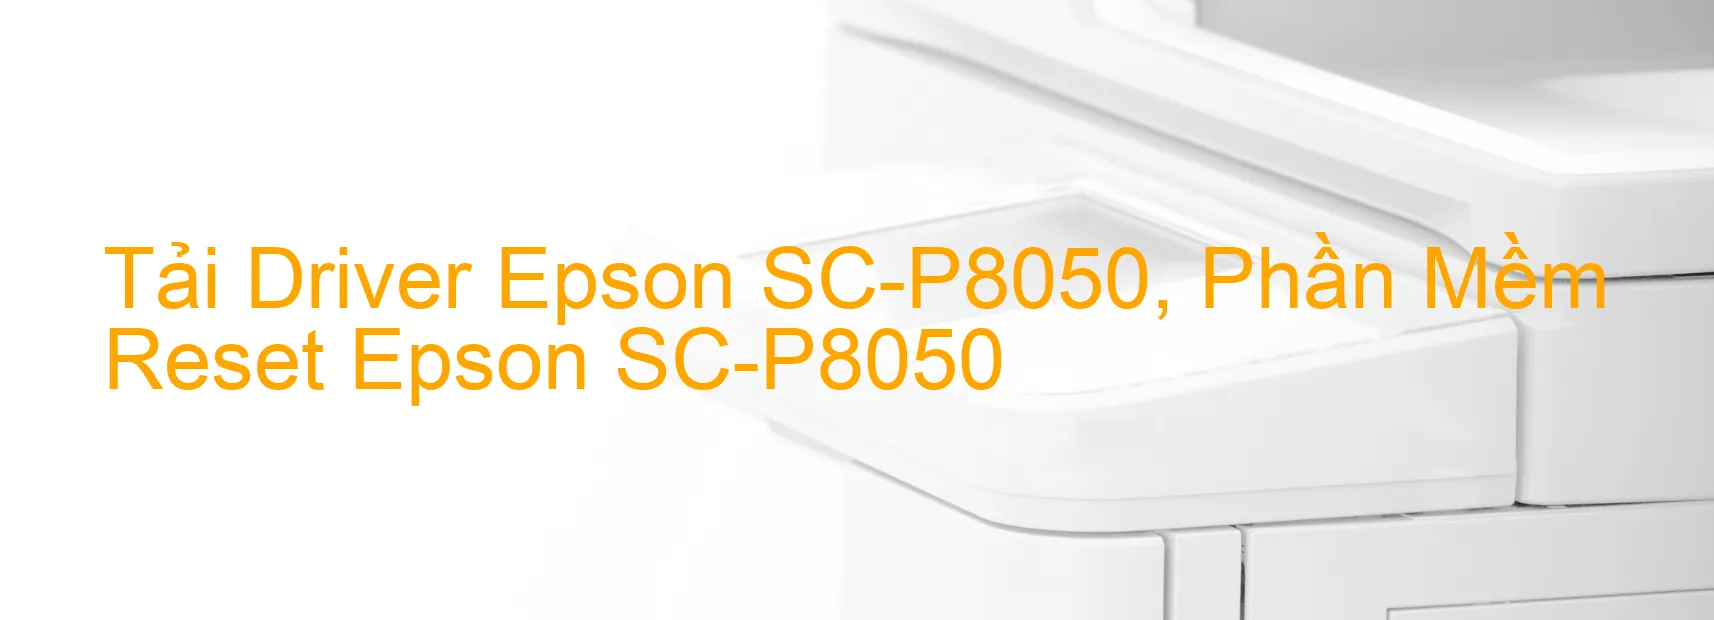 Driver Epson SC-P8050, Phần Mềm Reset Epson SC-P8050